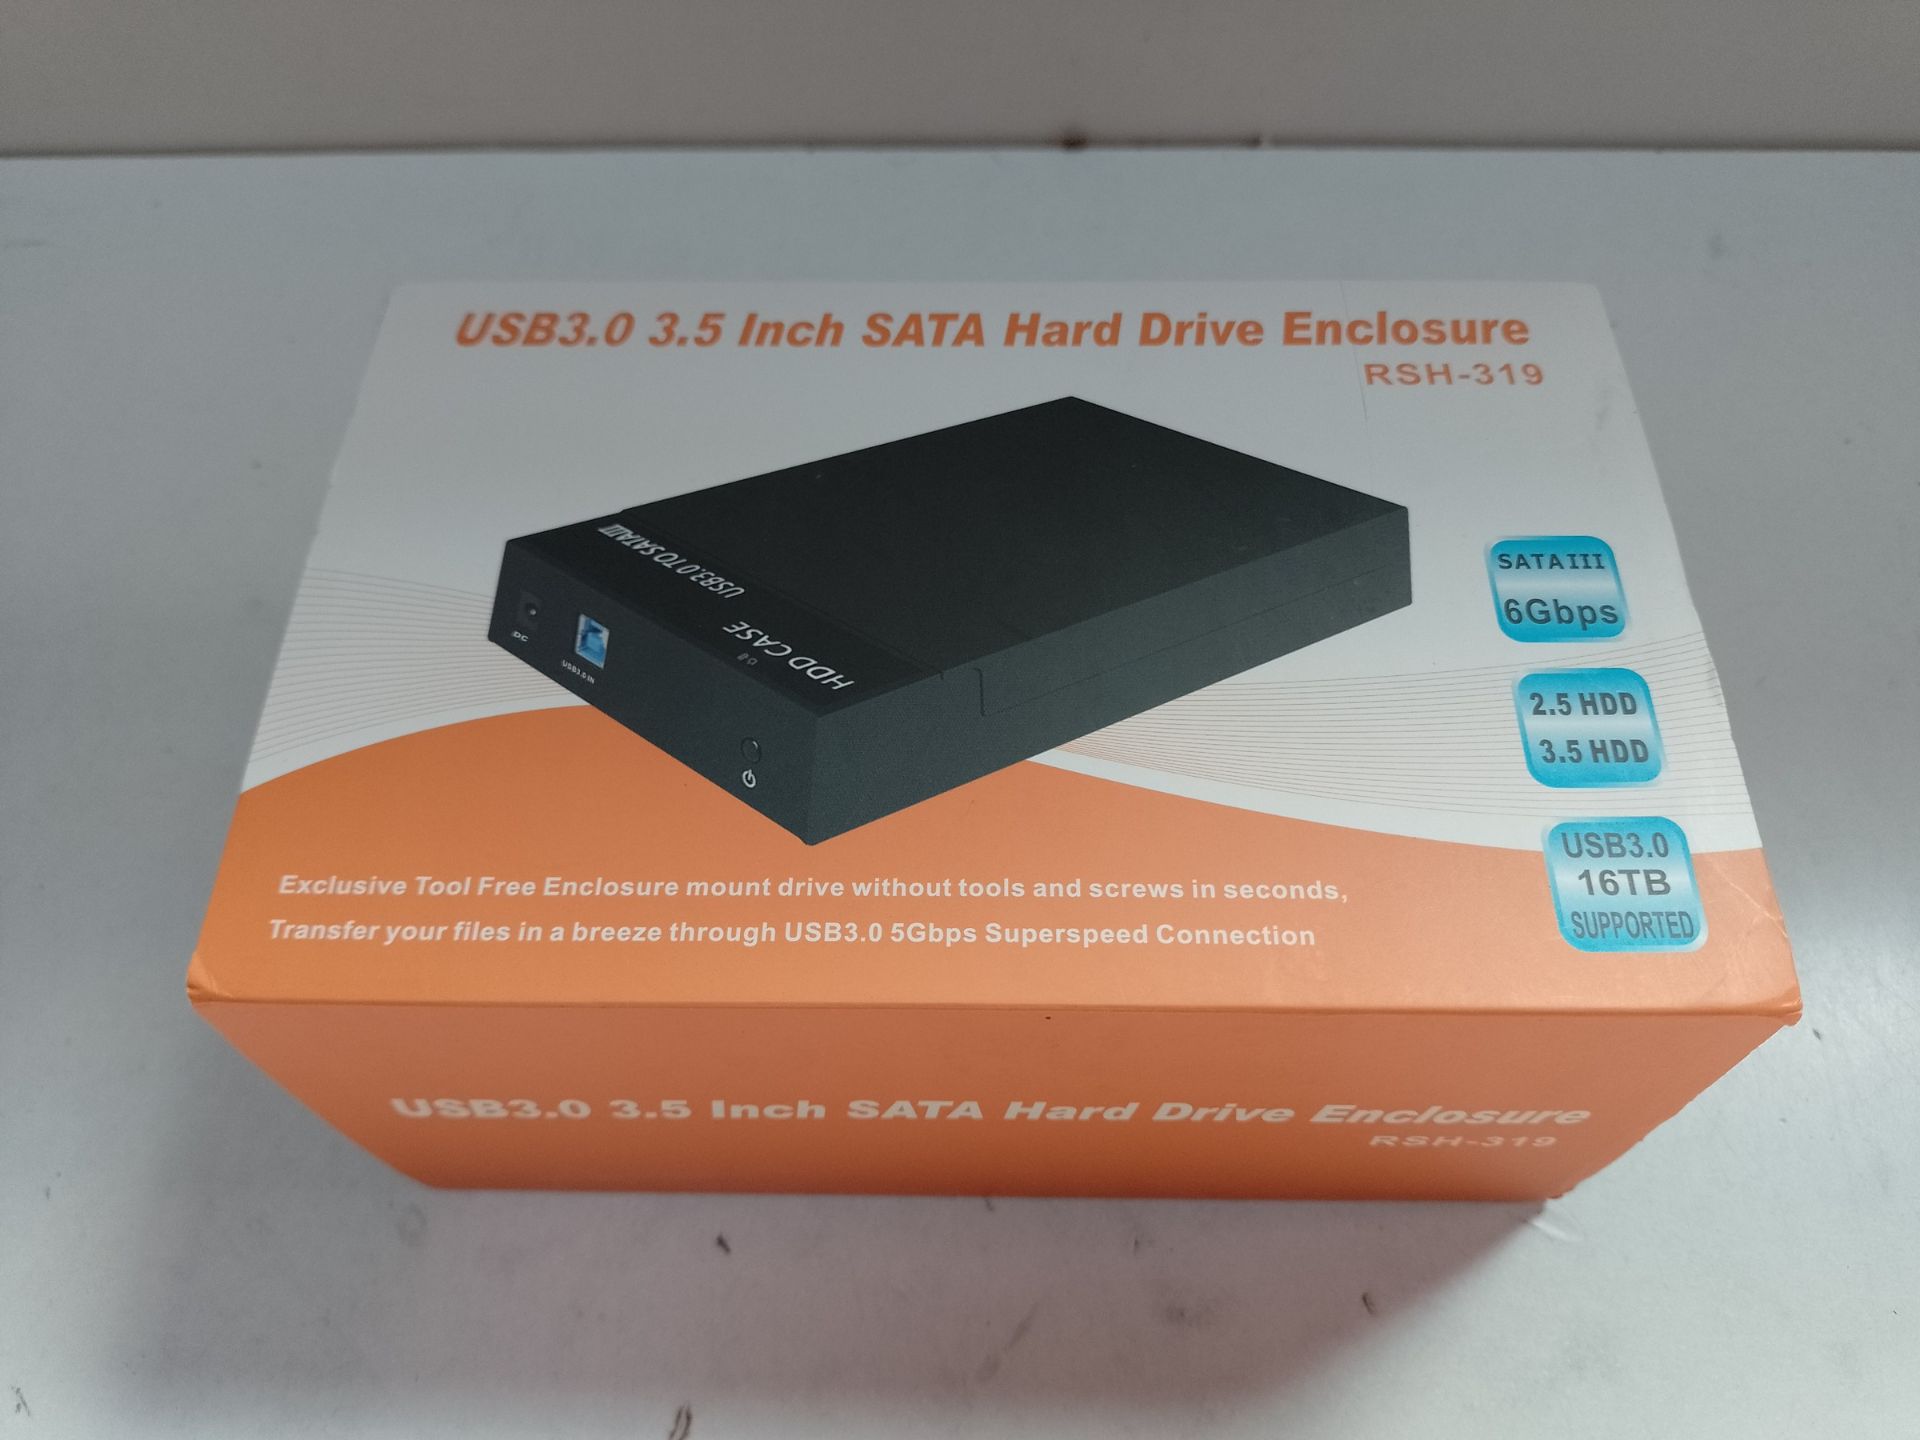 RRP £22.82 RSHTECH USB 3.0 External Hard Drive Enclosure HDD Caddy - Image 2 of 2